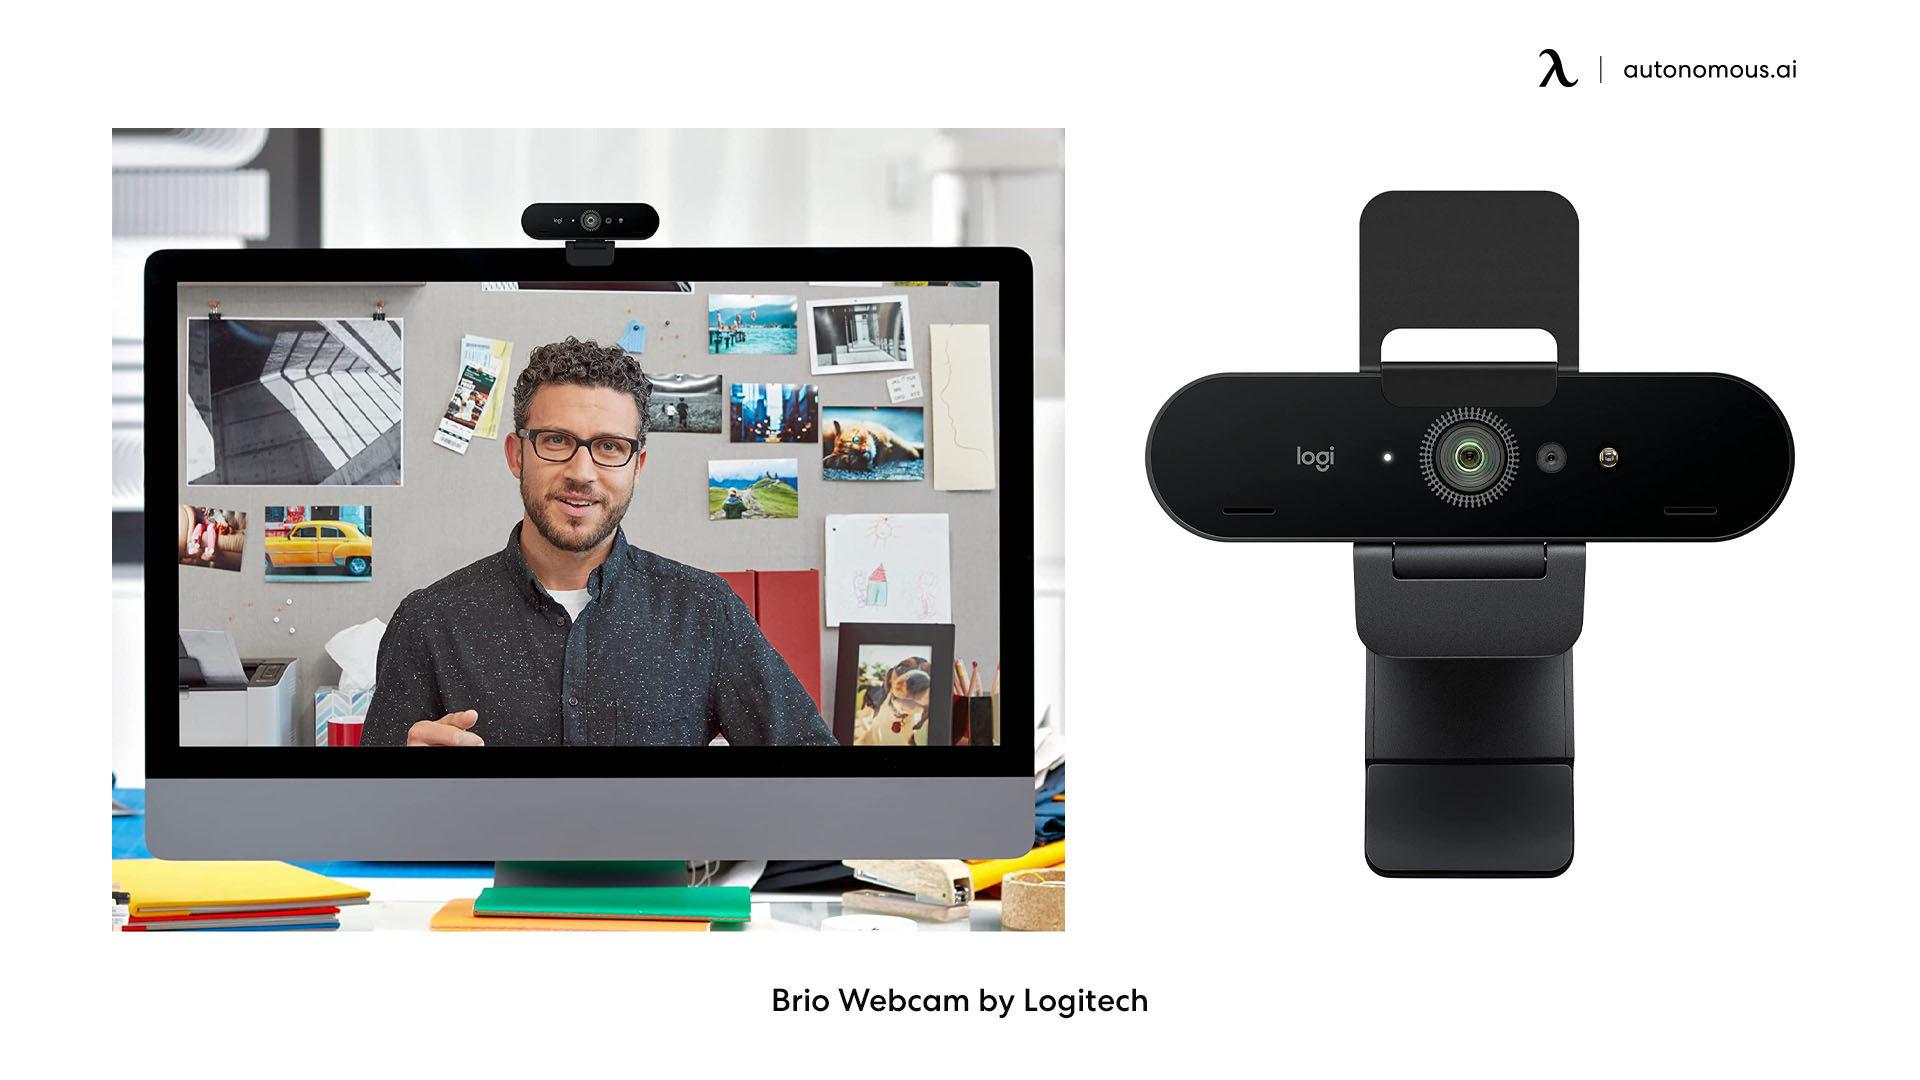 Brio Webcam by Logitech